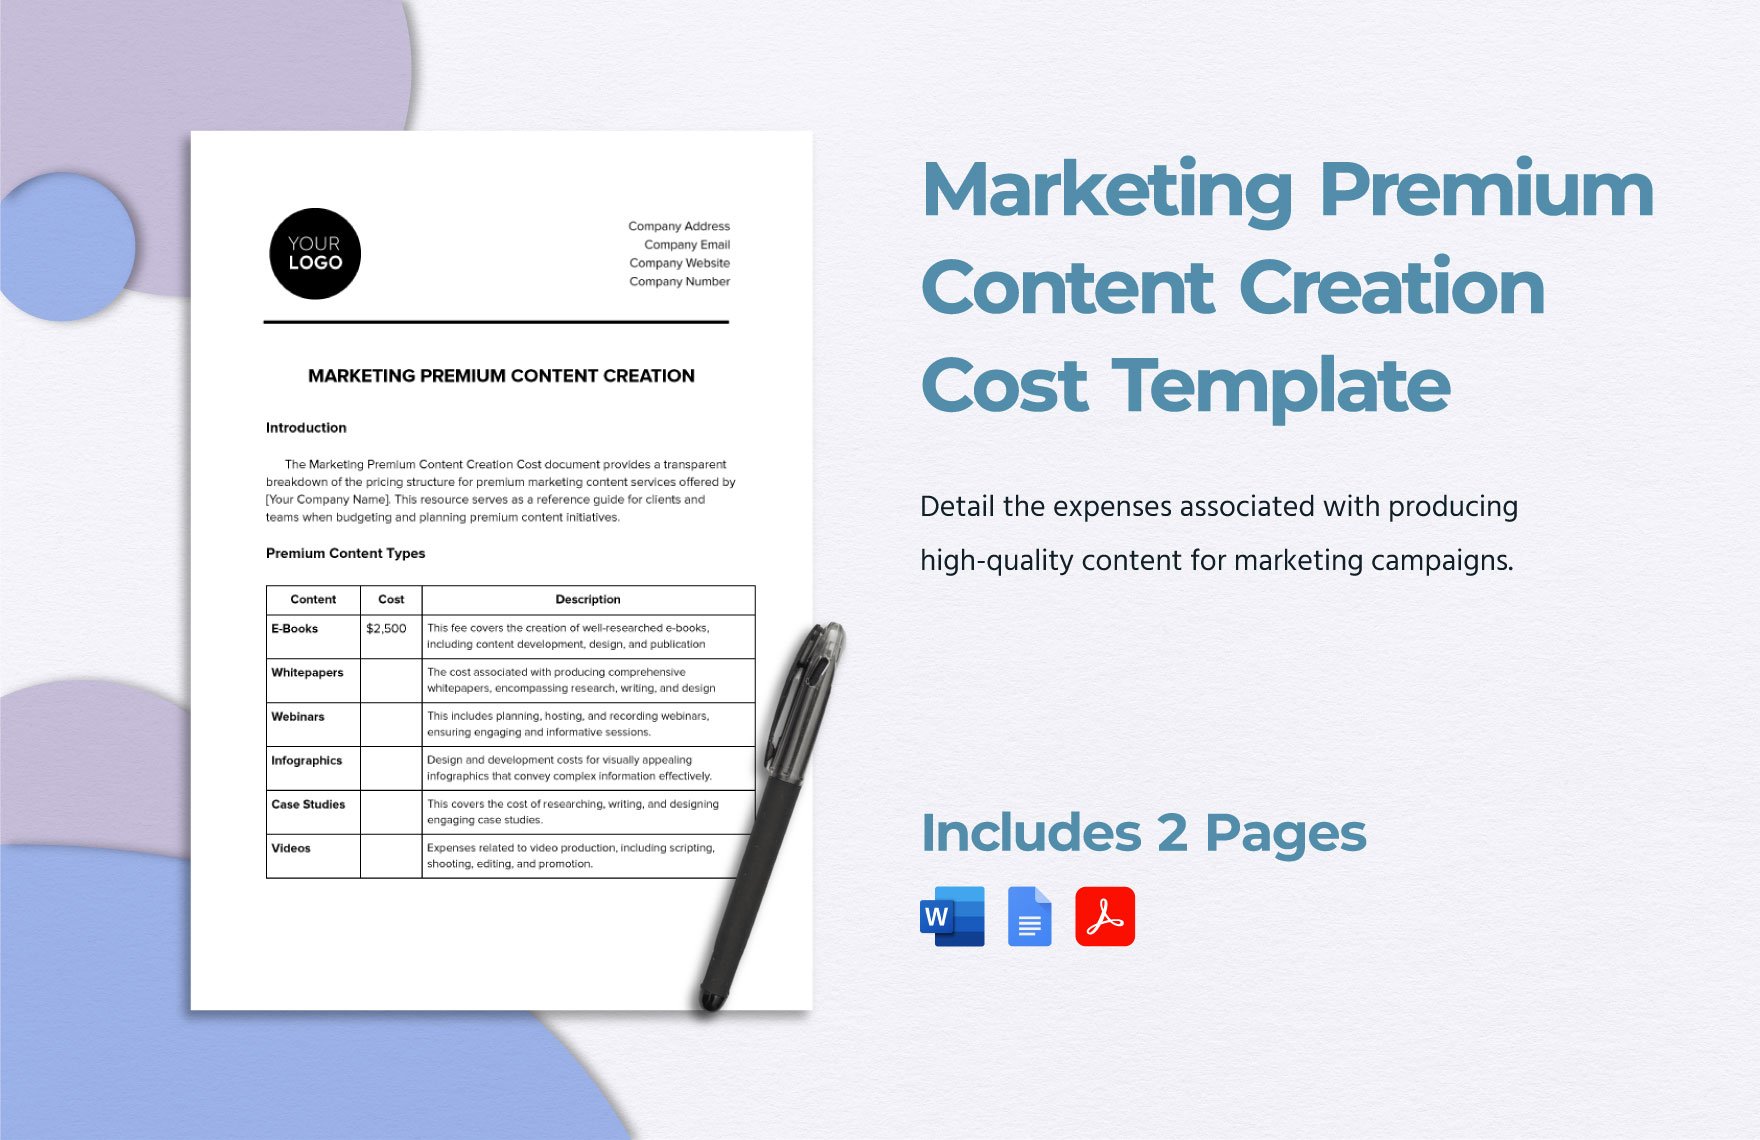 Marketing Premium Content Creation Cost Template